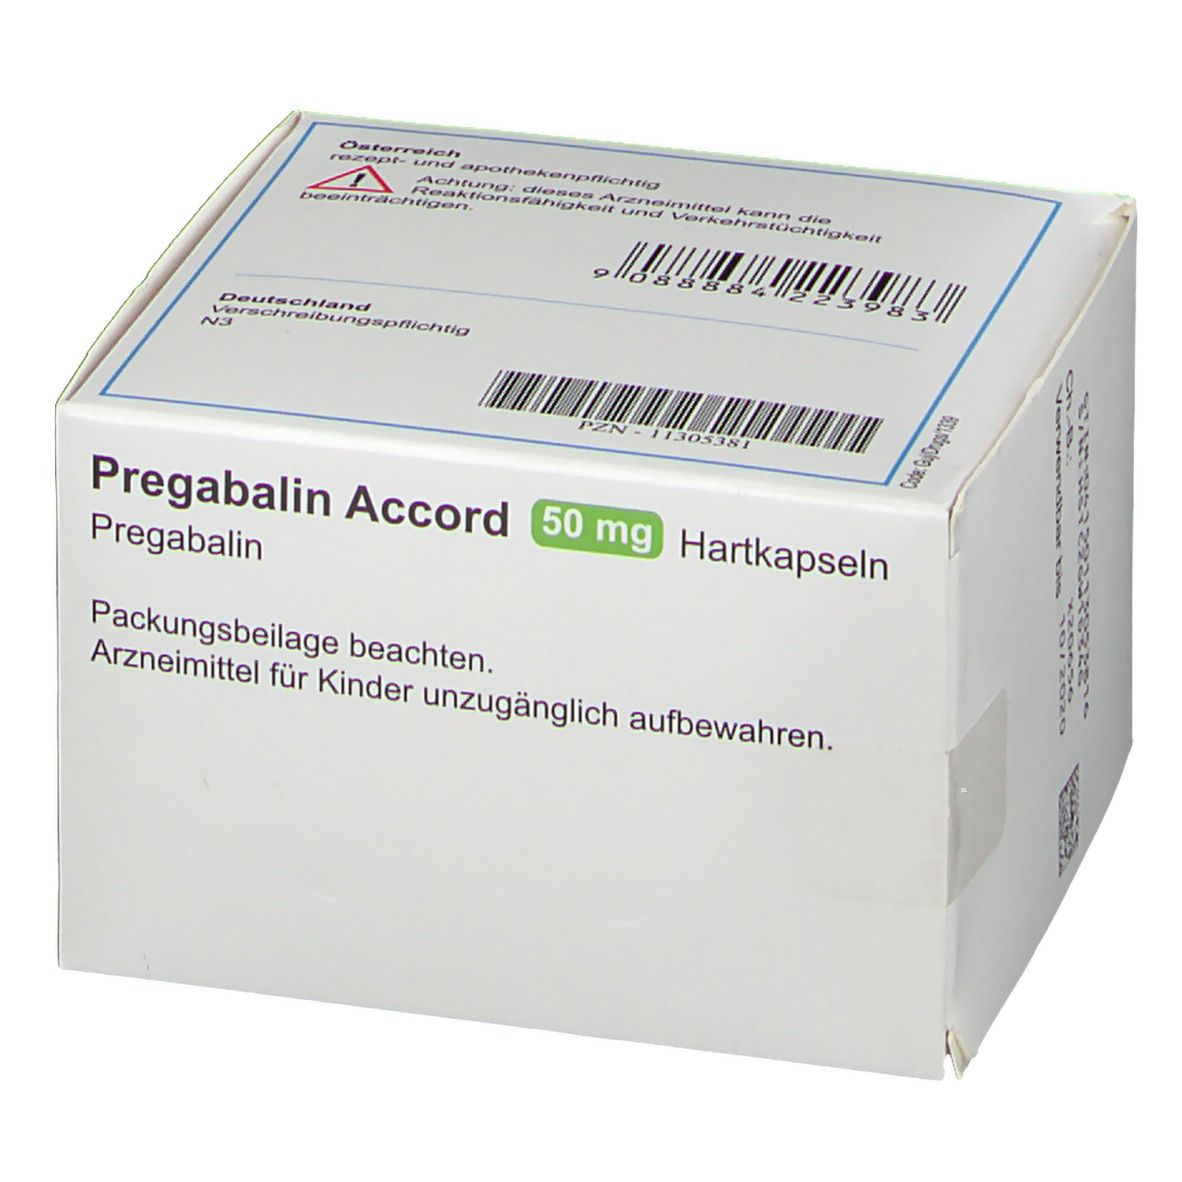 Pregabalin Accord 50 mg